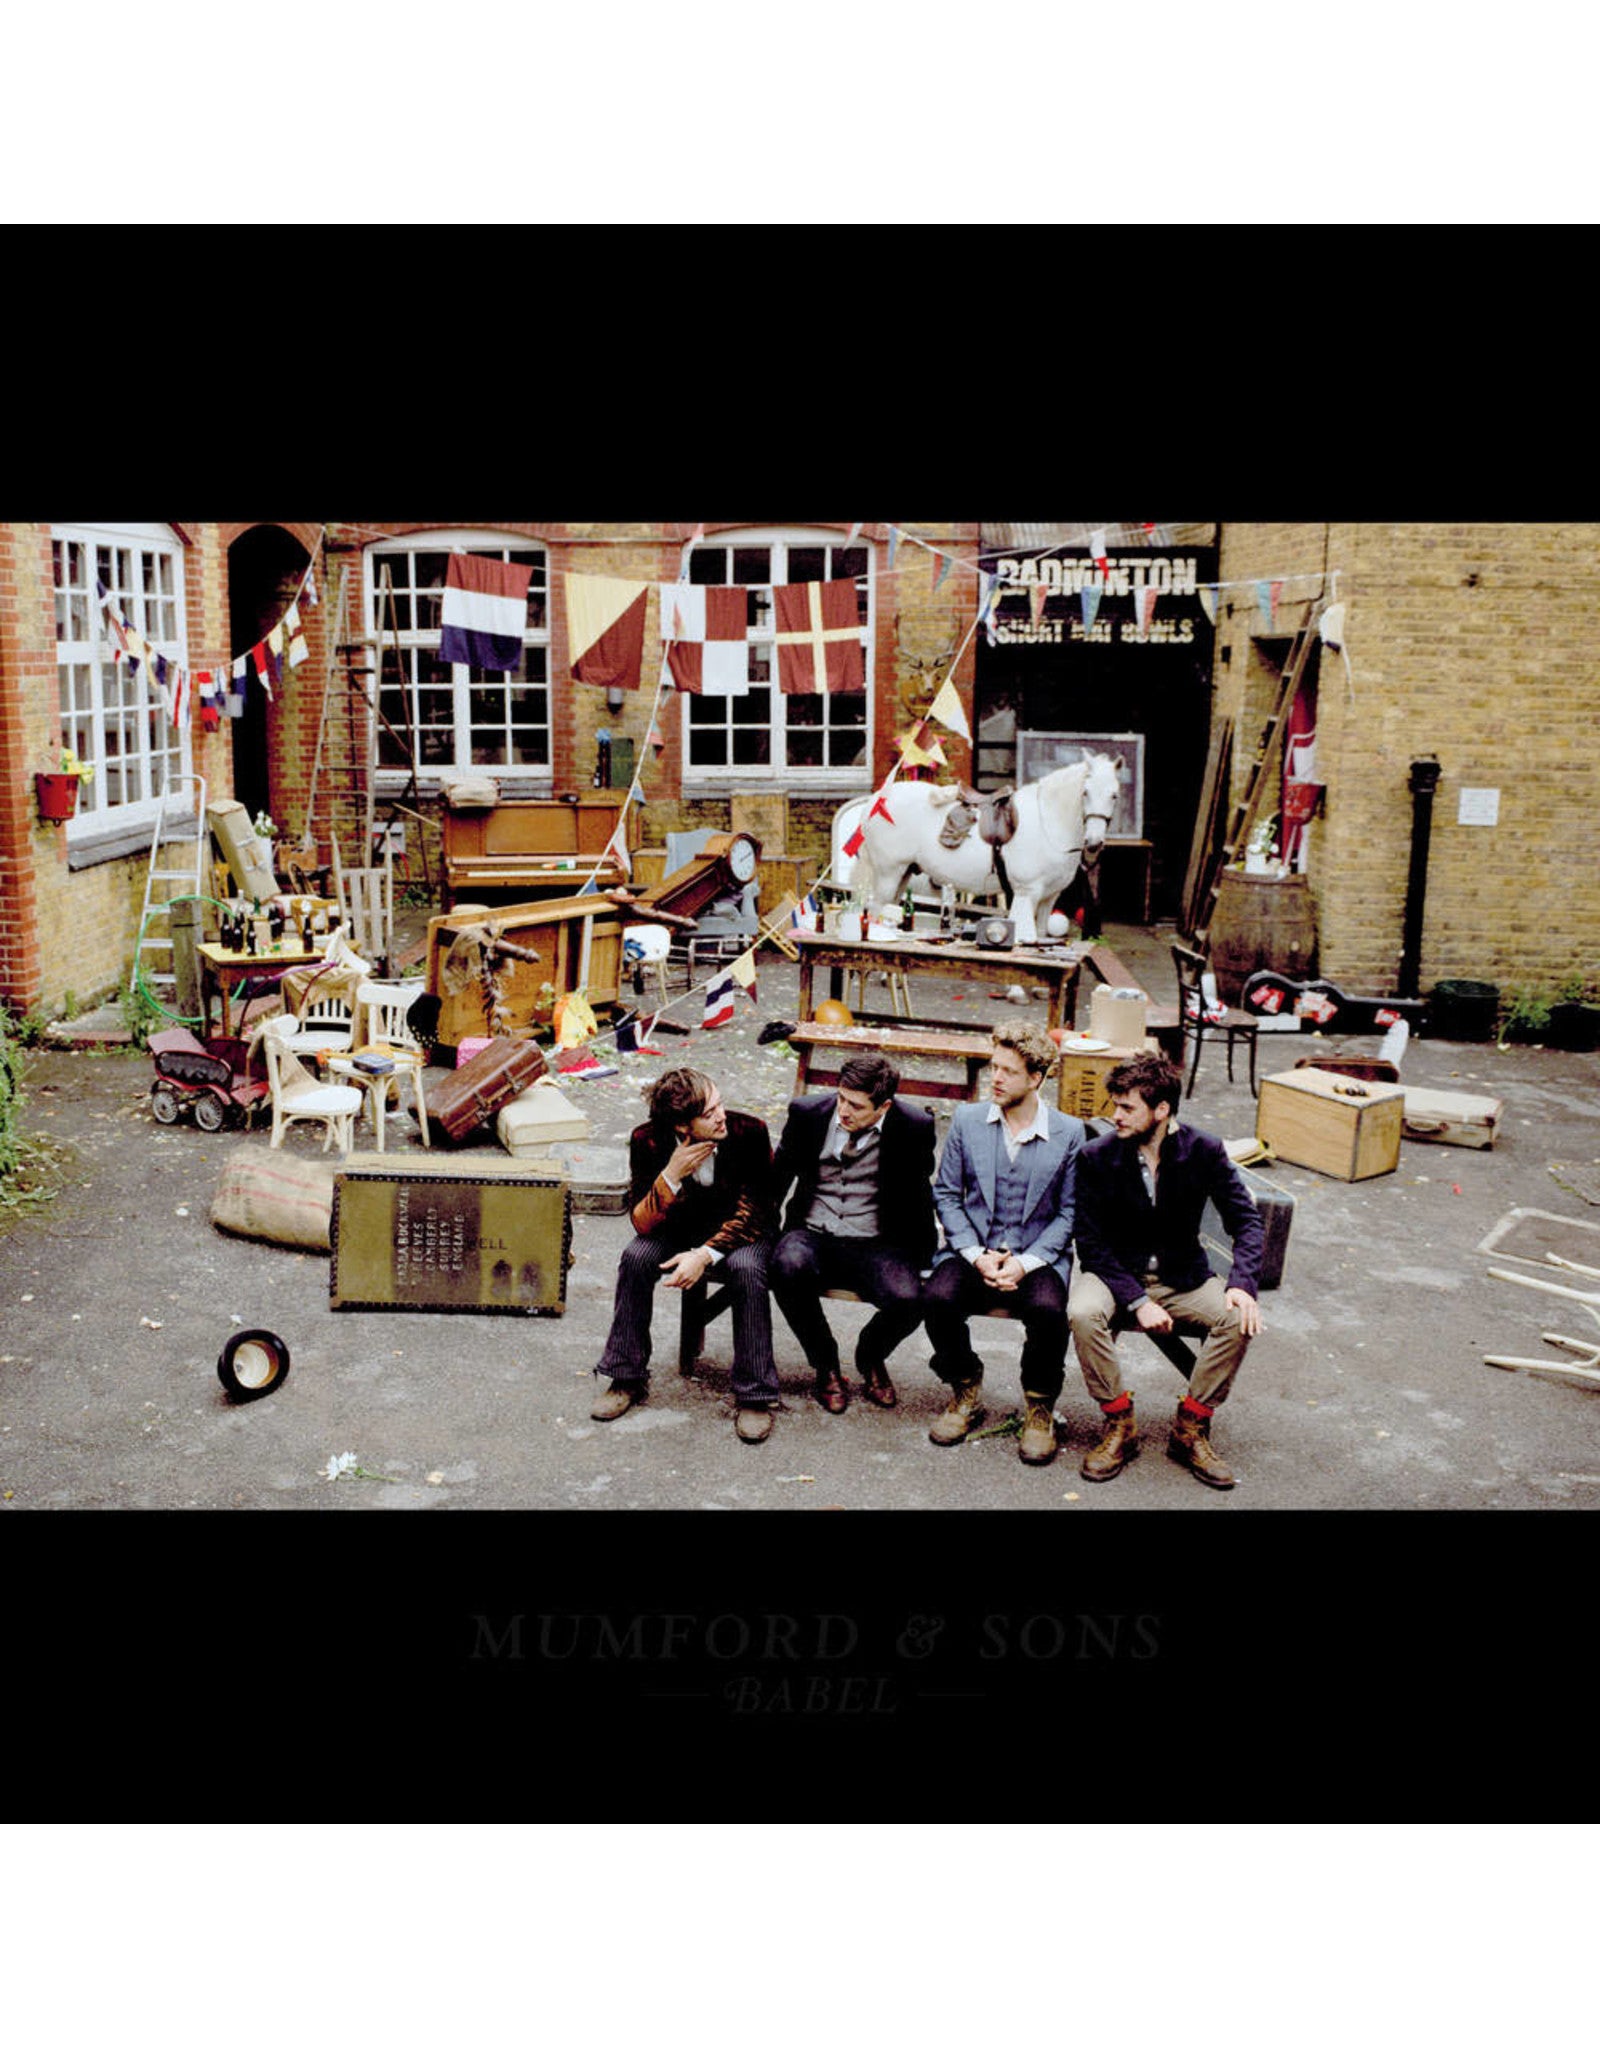 Mumford & Sons - Babel: 10th Anniversary (Vinyl Cream LP)